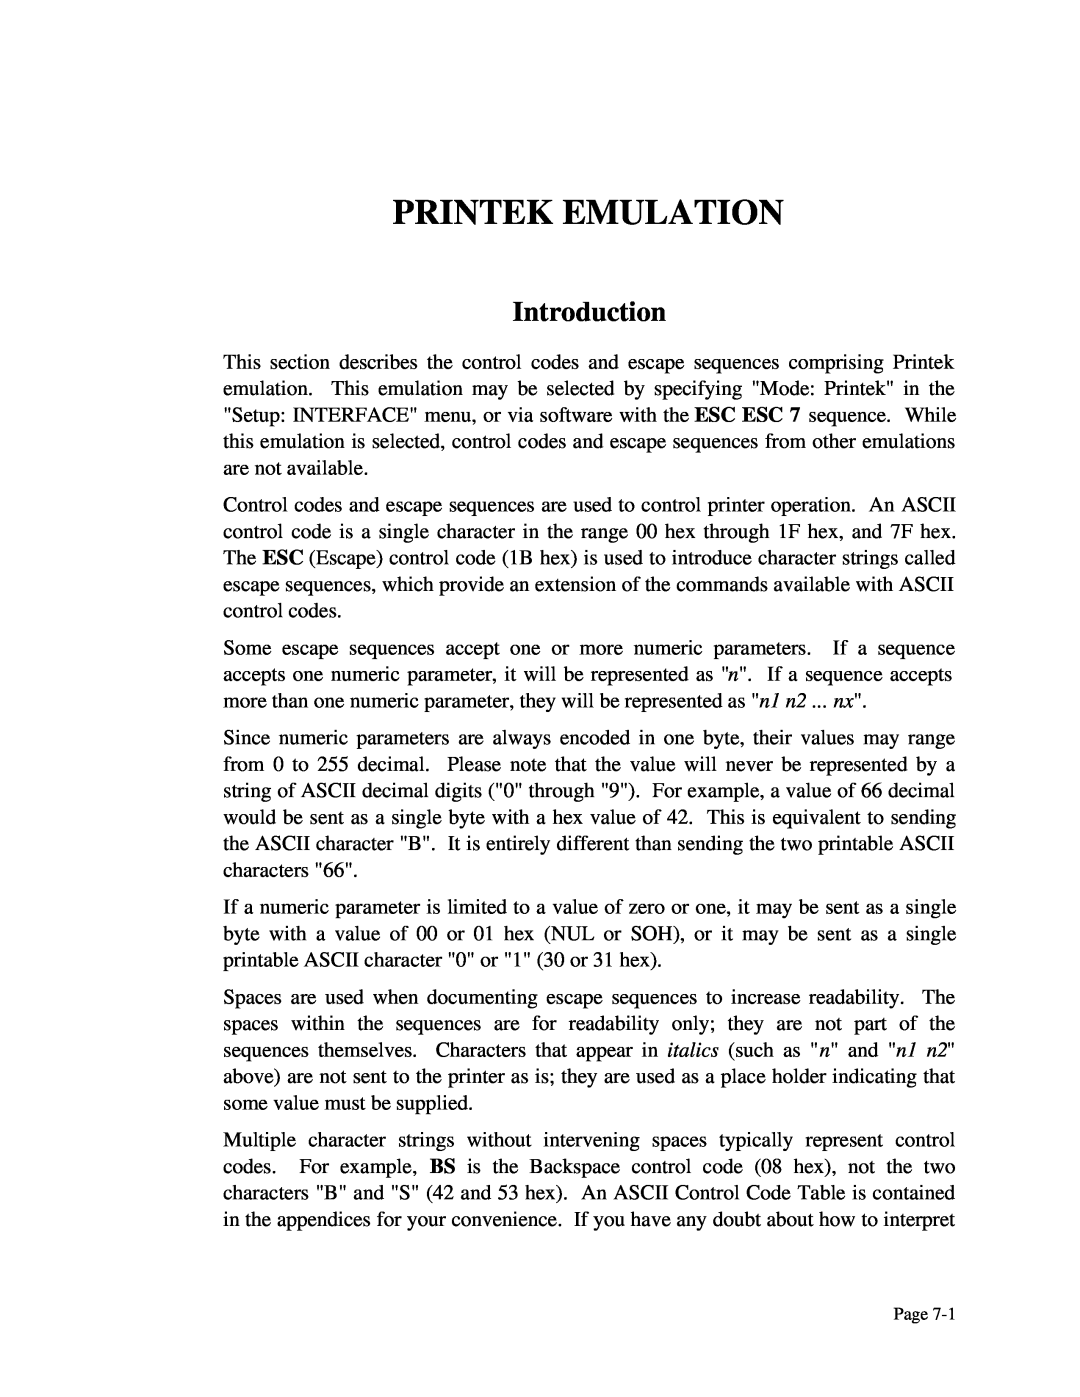 Printek 4500, 4503, 4300 manual Printek Emulation, Introduction 